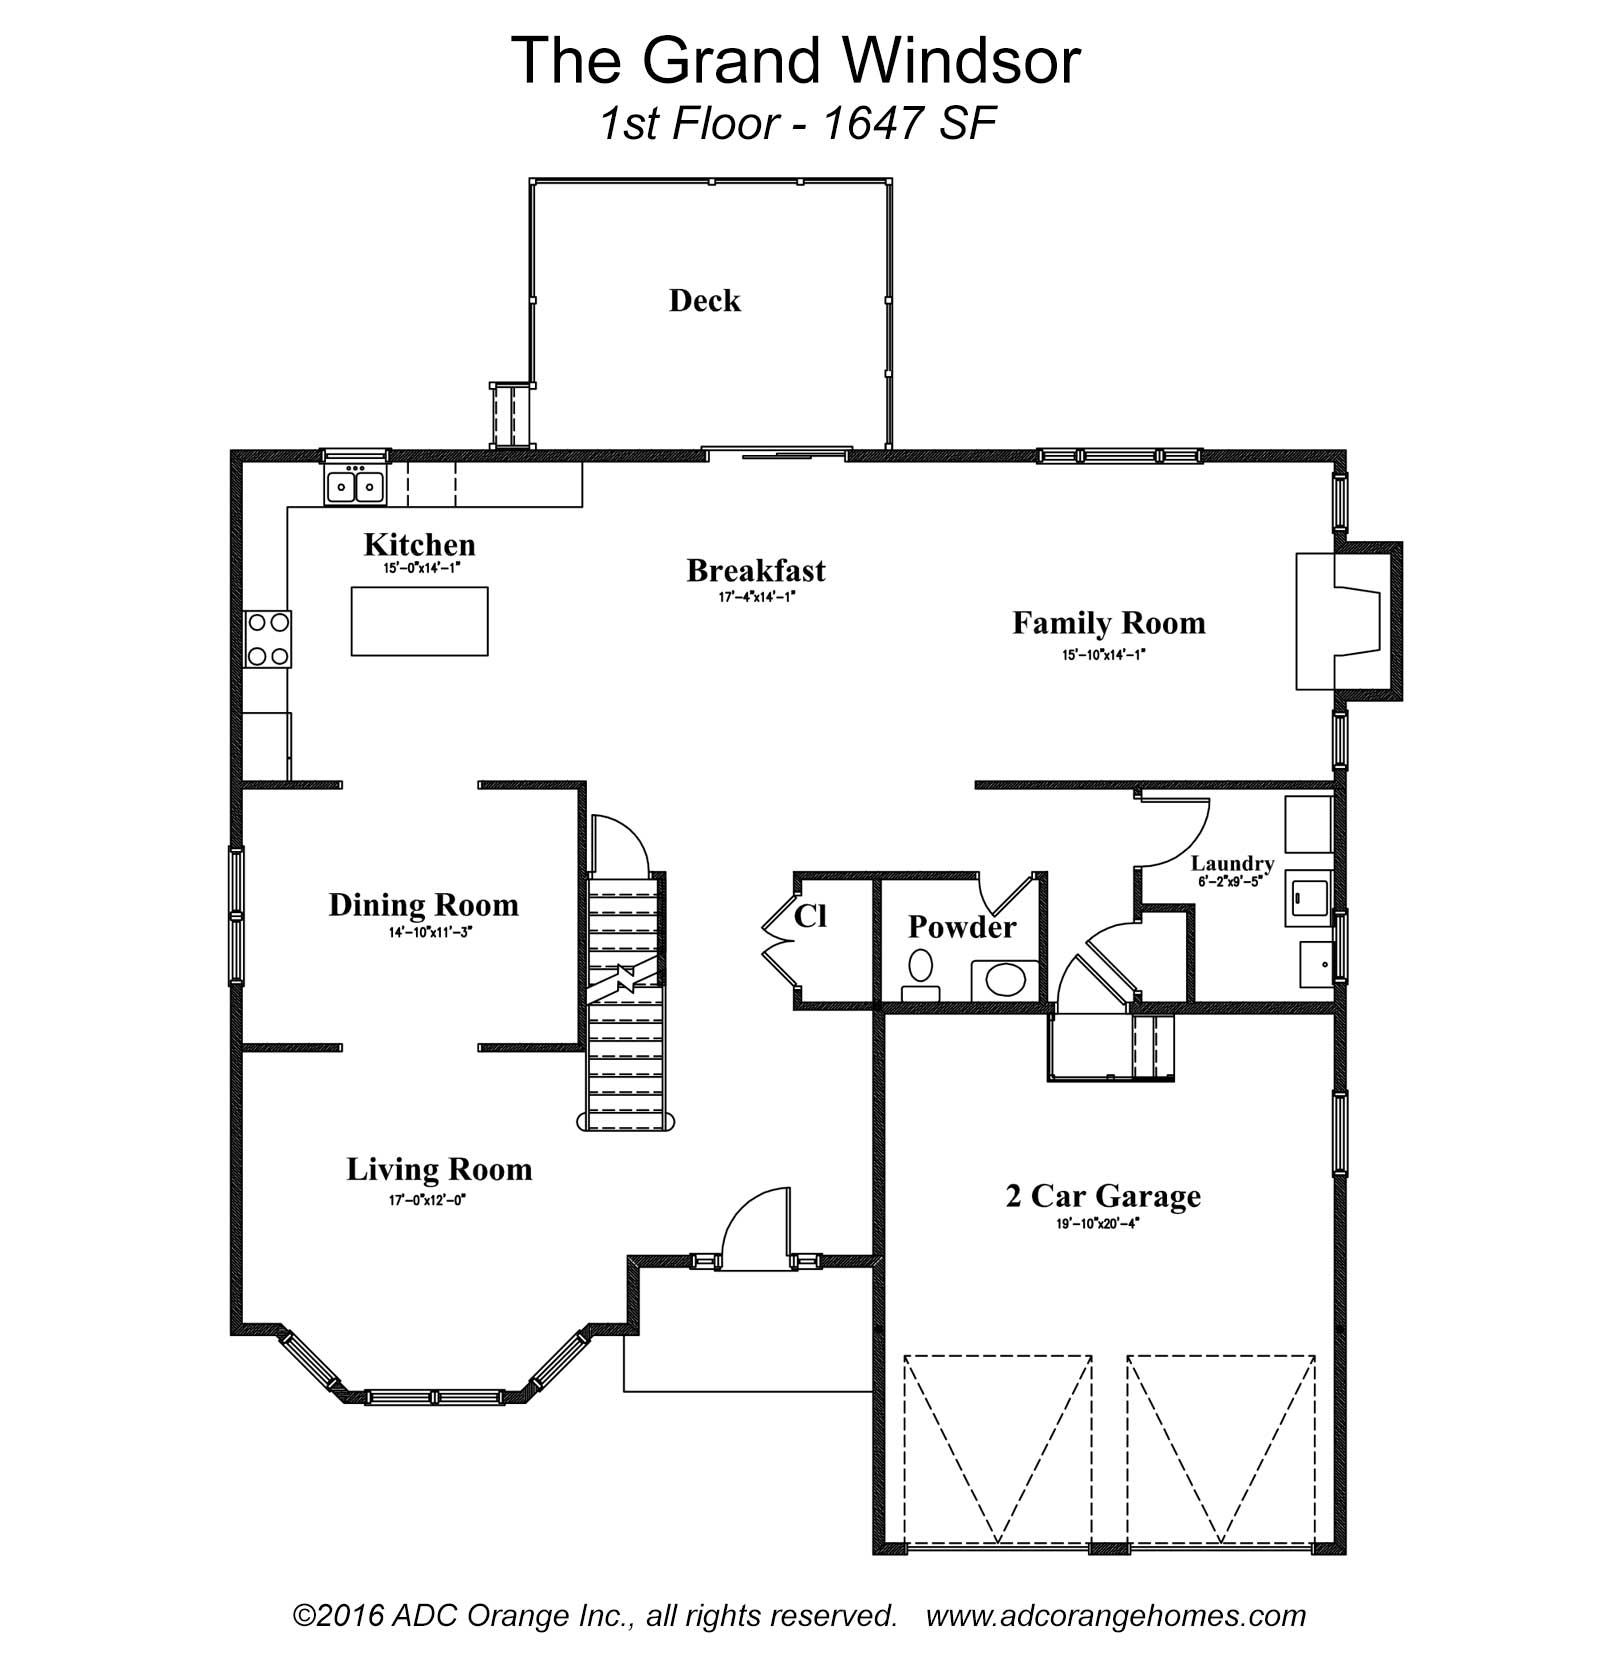 1st Floor Plan for Grand Windsor - New Home in Orange County, New York